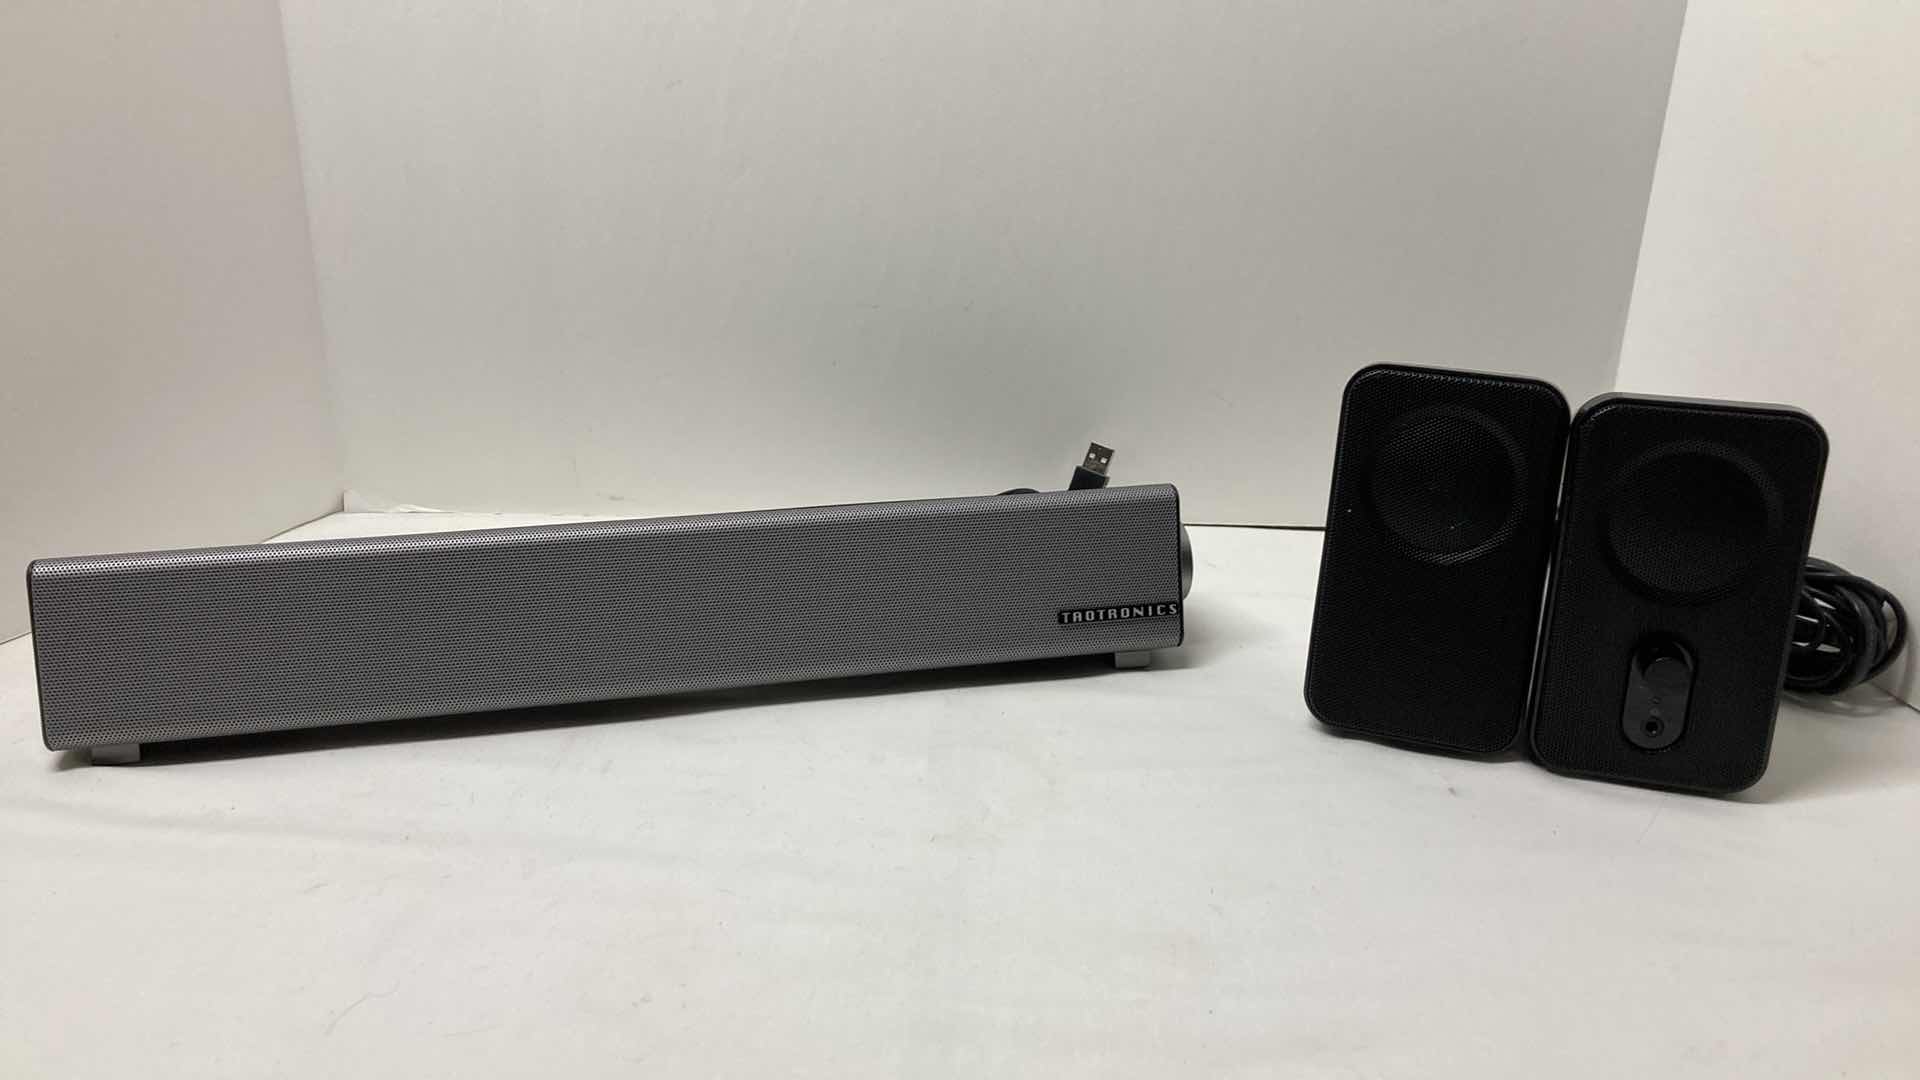 Photo 1 of TAO TRONICS PC WIRED SOUND BAR MODEL TTSK018 & AMAZON BASICS PC SPEAKERS MODEL V216US